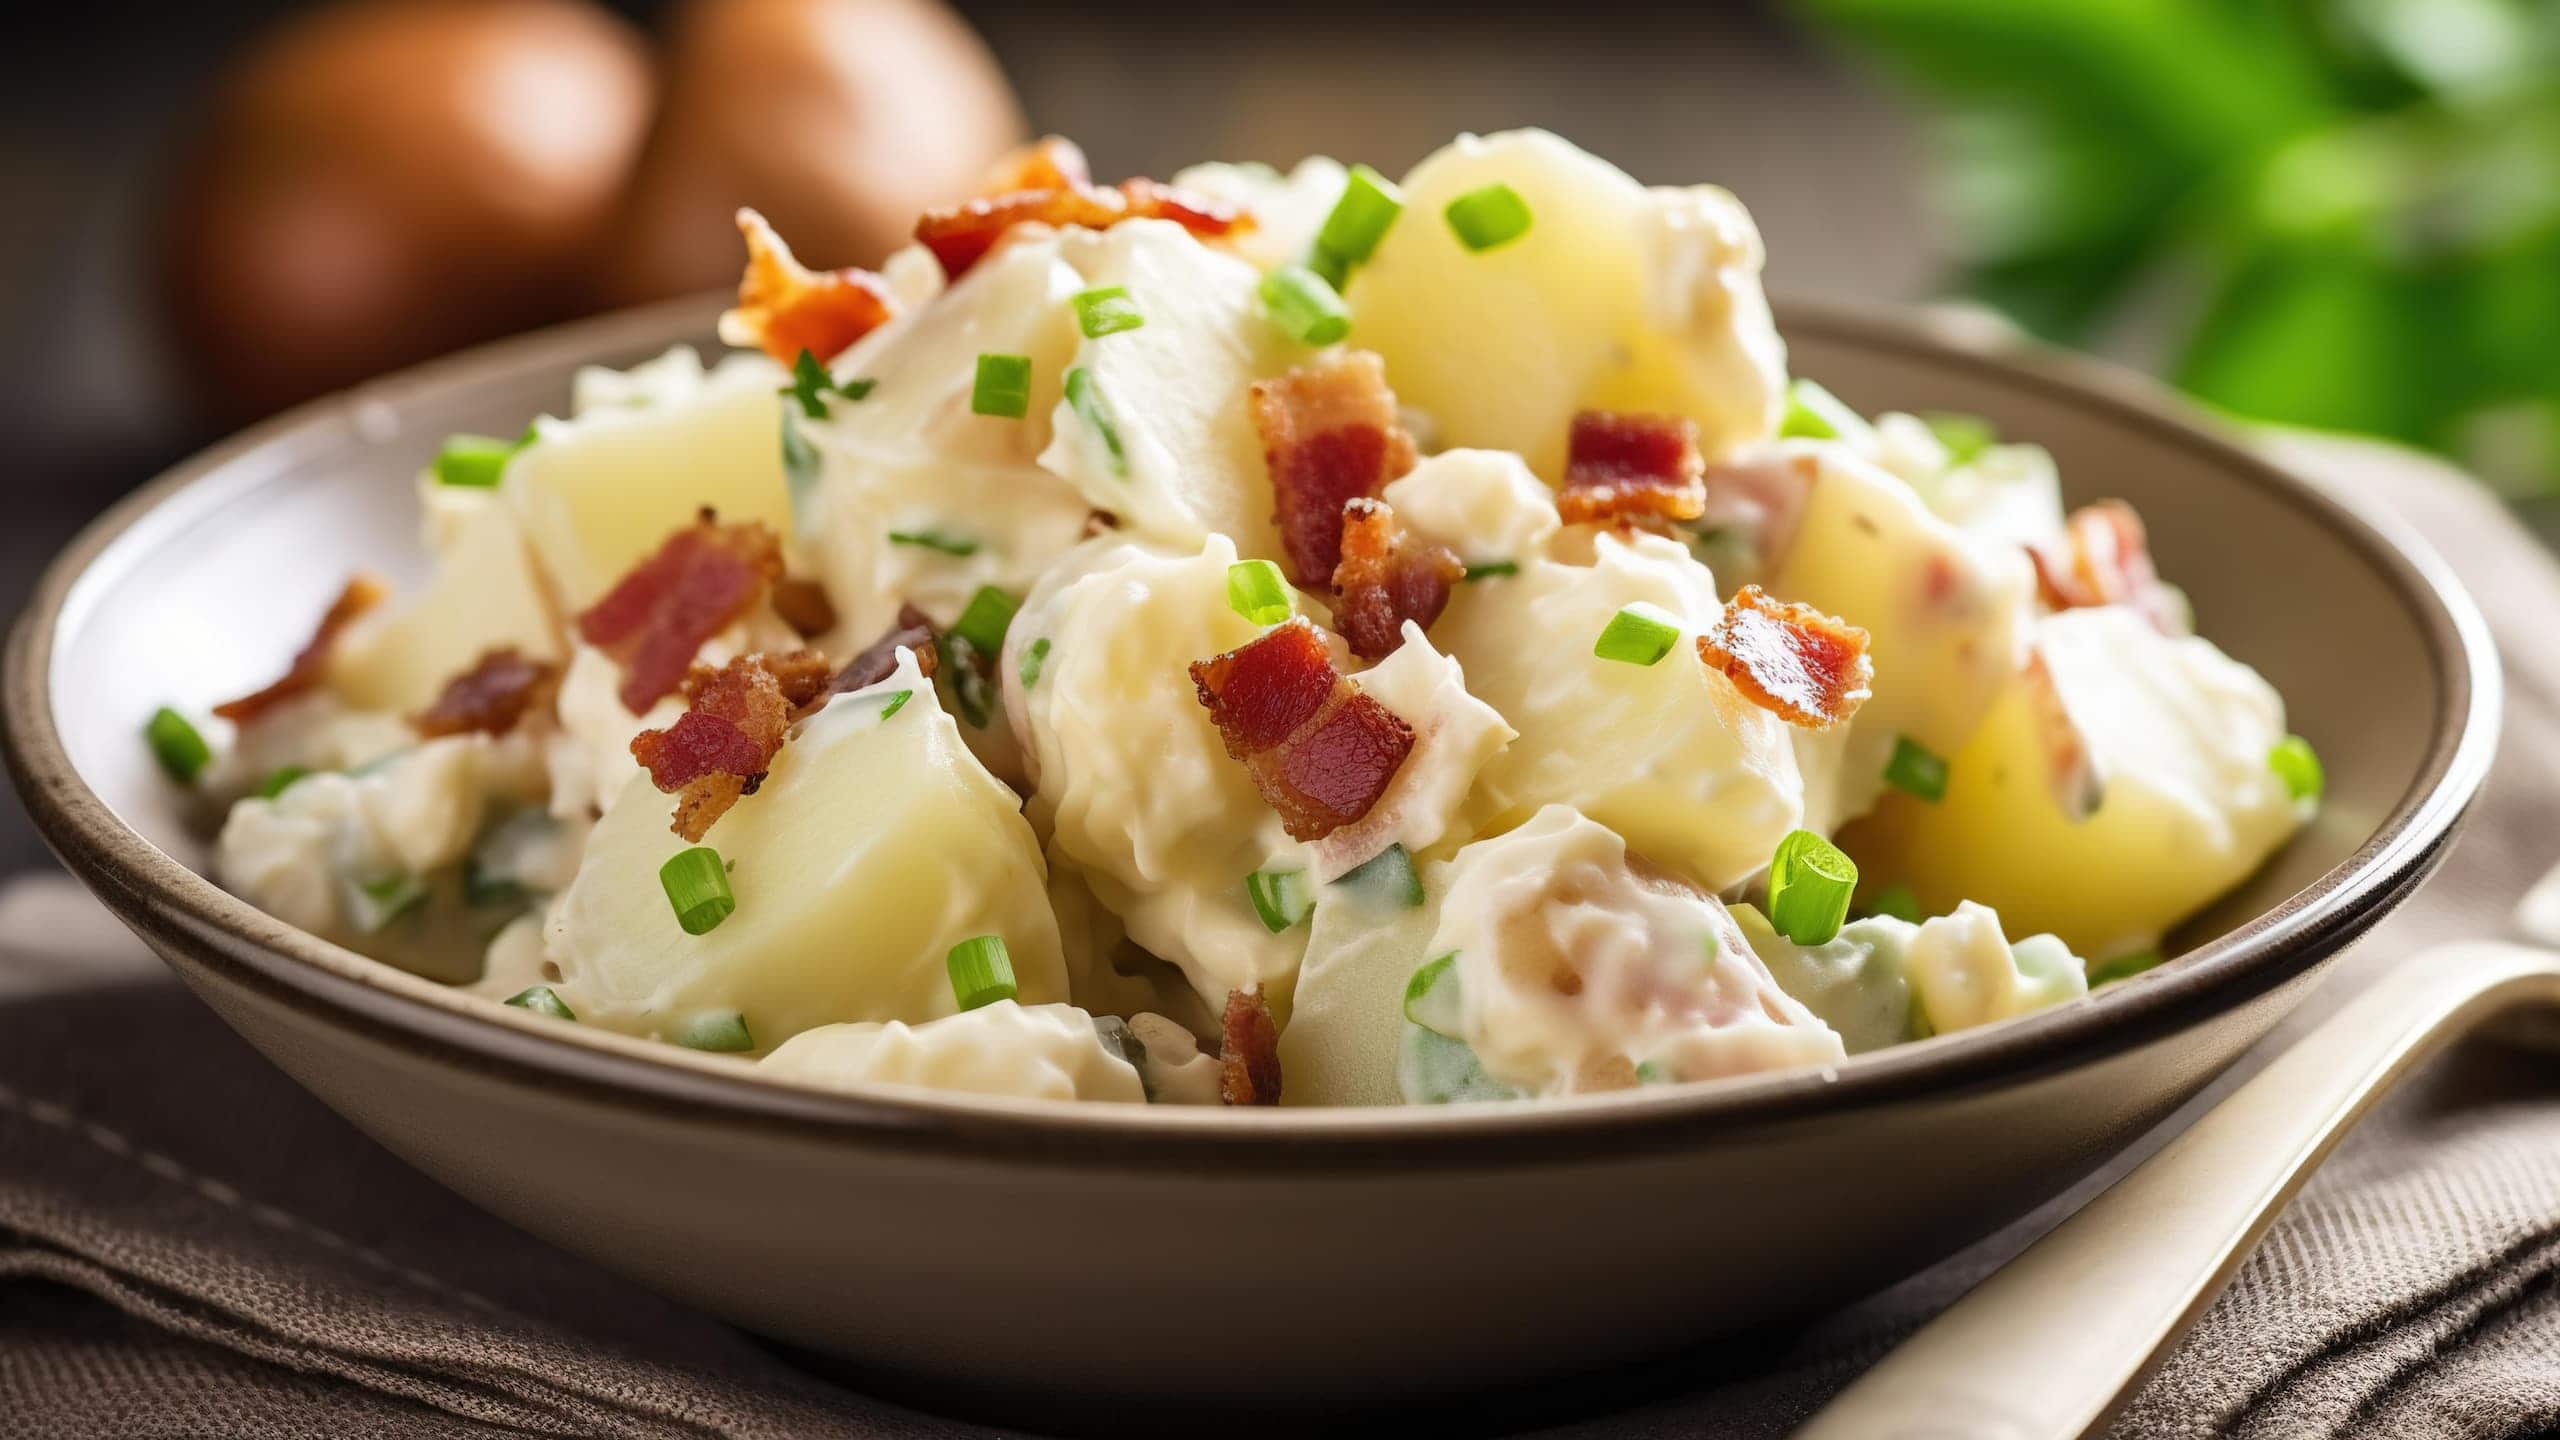 Our version of Juan Pollo's potato salad recipe